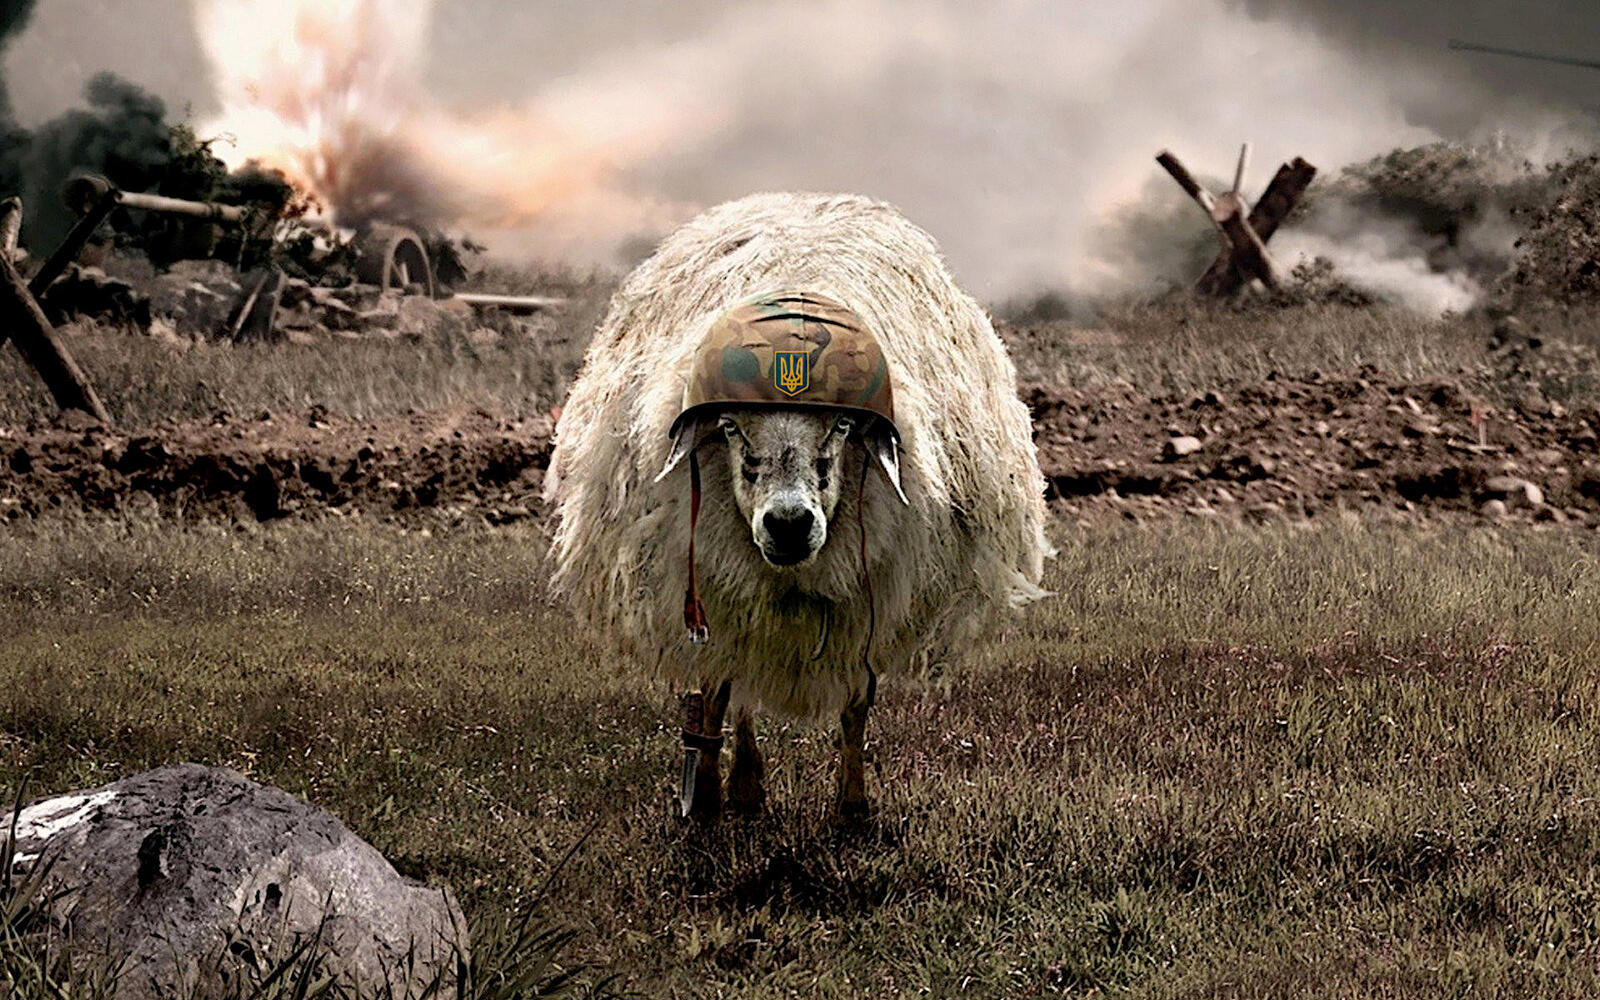 Free photo A sheep in a military helmet